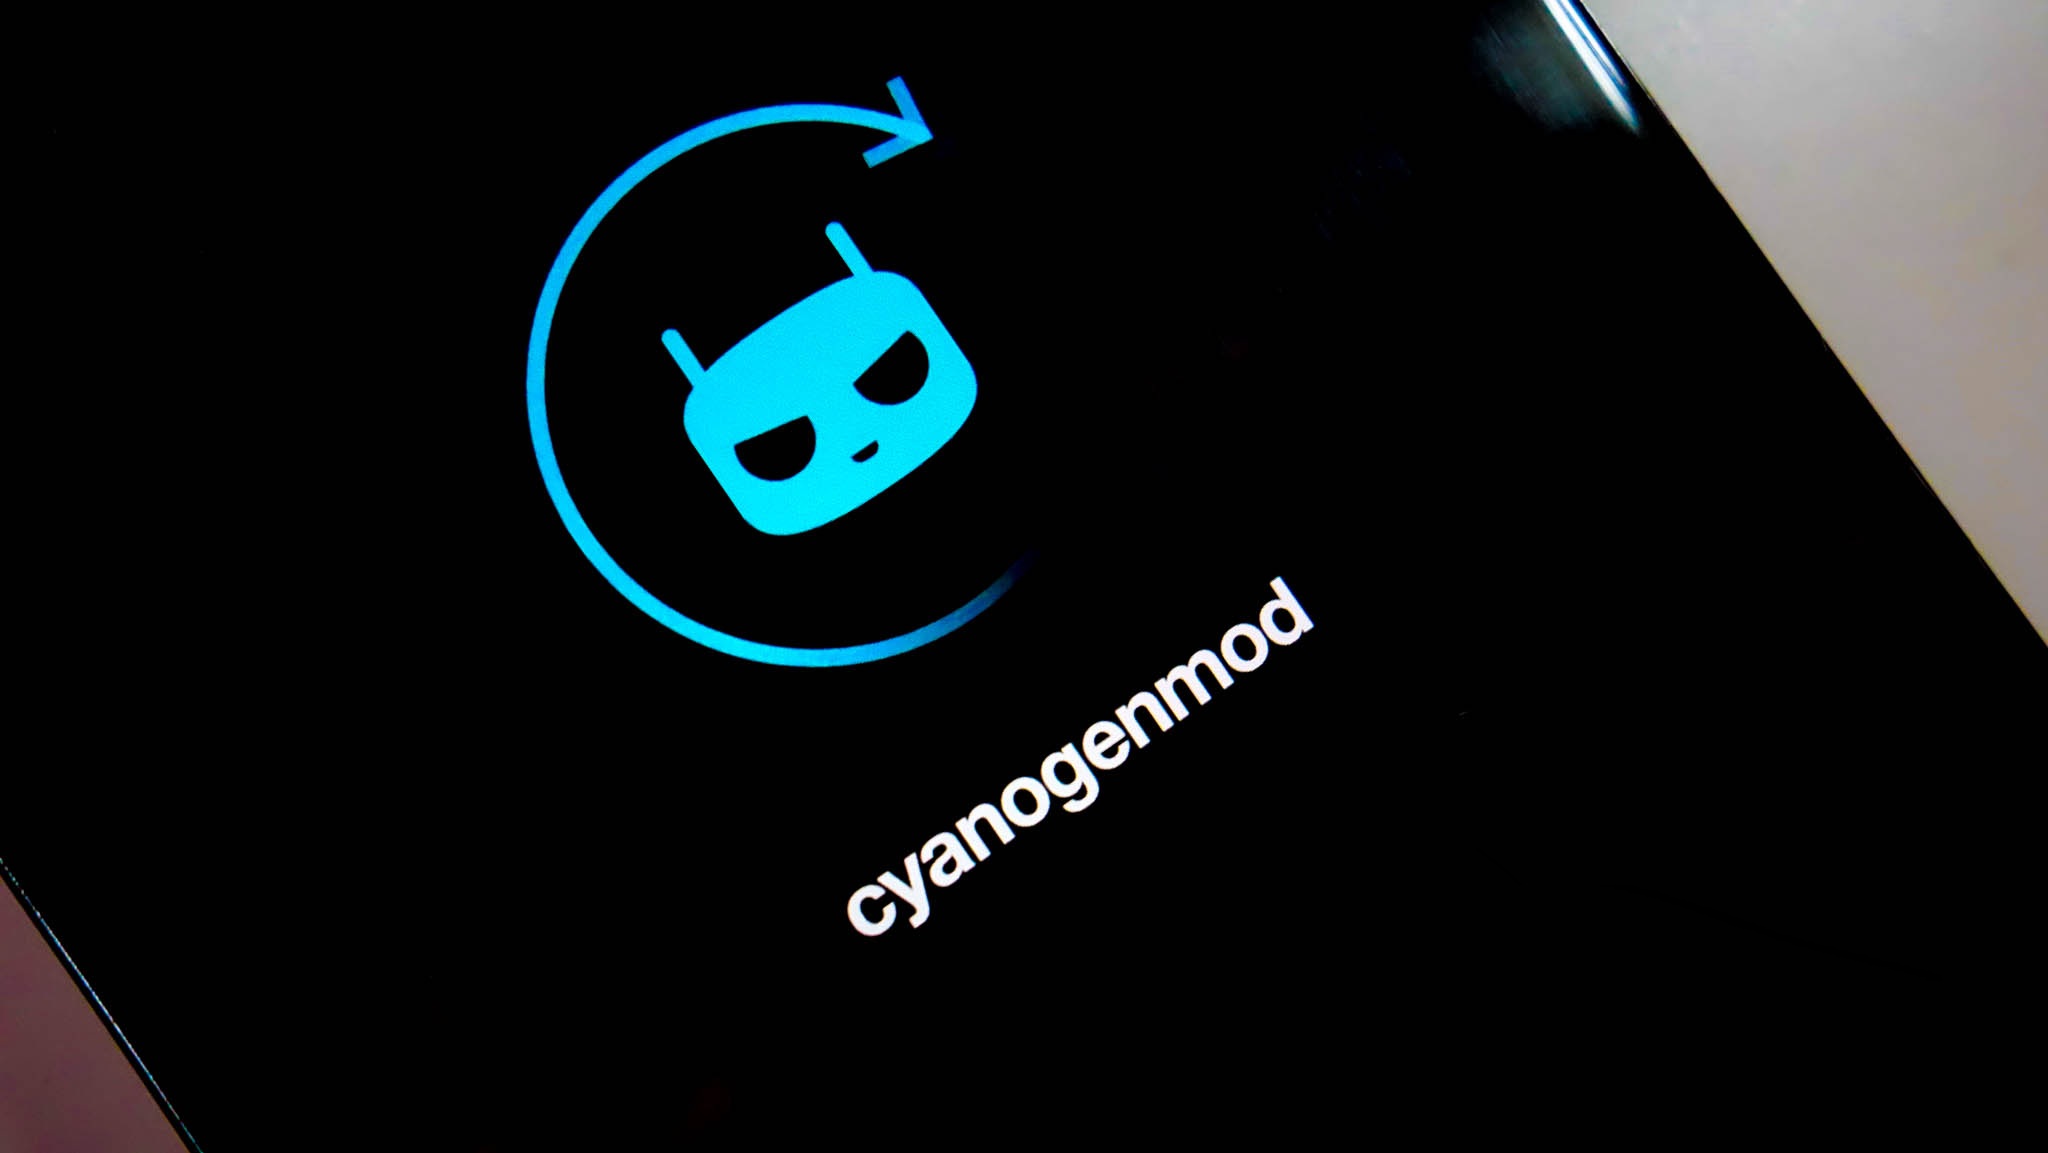 Cyanogen: ما کاربران بیشتری نسبت به Windows Mobile و بلک بری داریم - تکفارس 